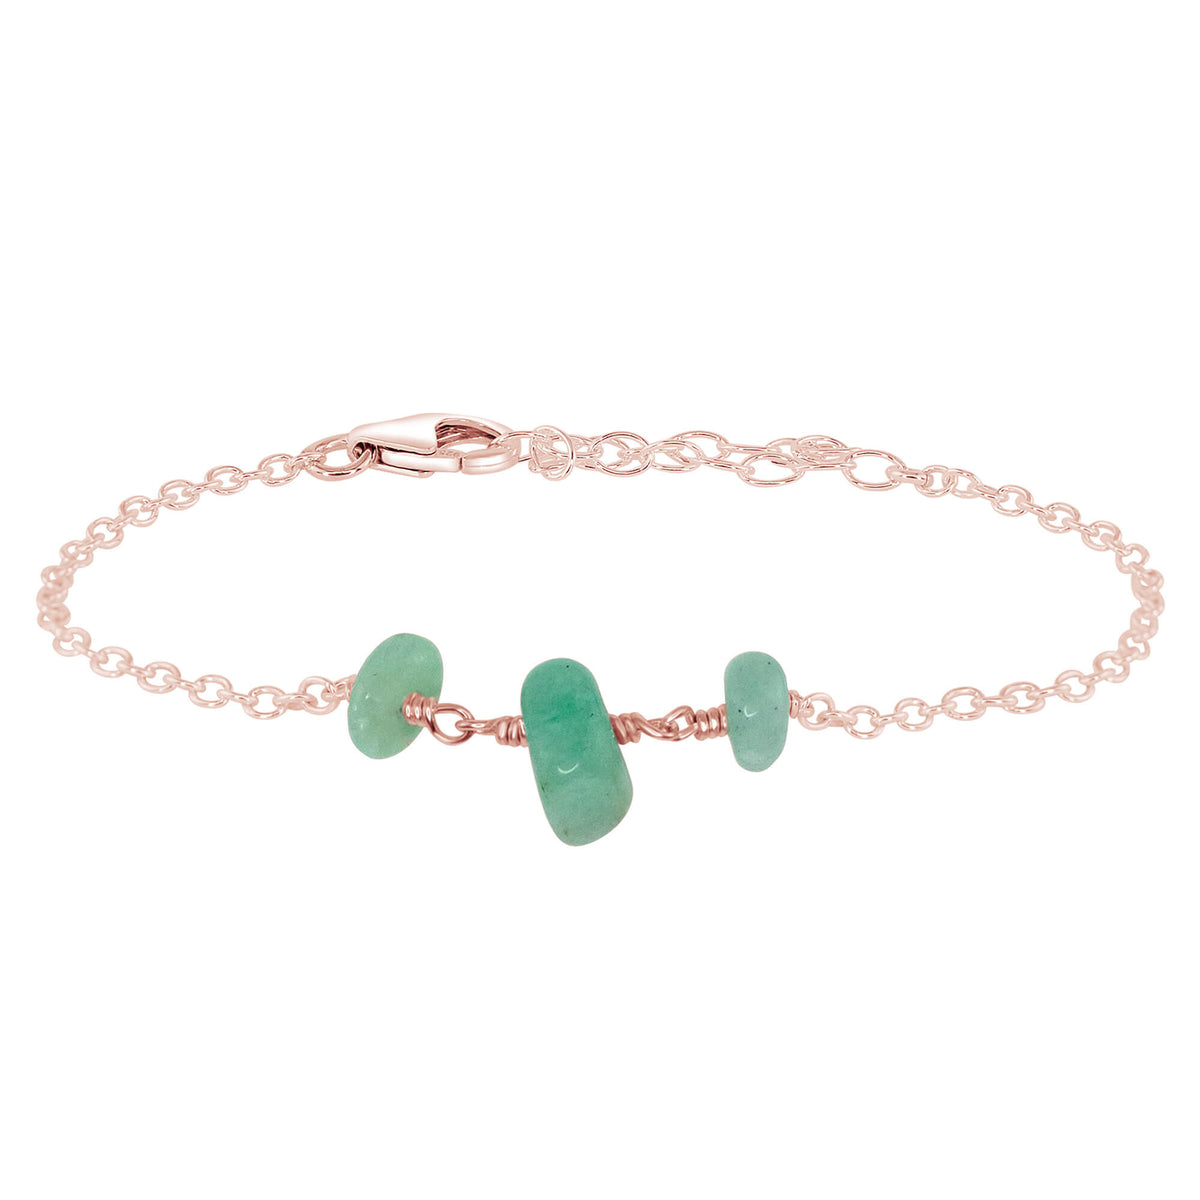 Beaded Chain Bracelet - Amazonite - 14K Rose Gold Fill - Luna Tide Handmade Jewellery